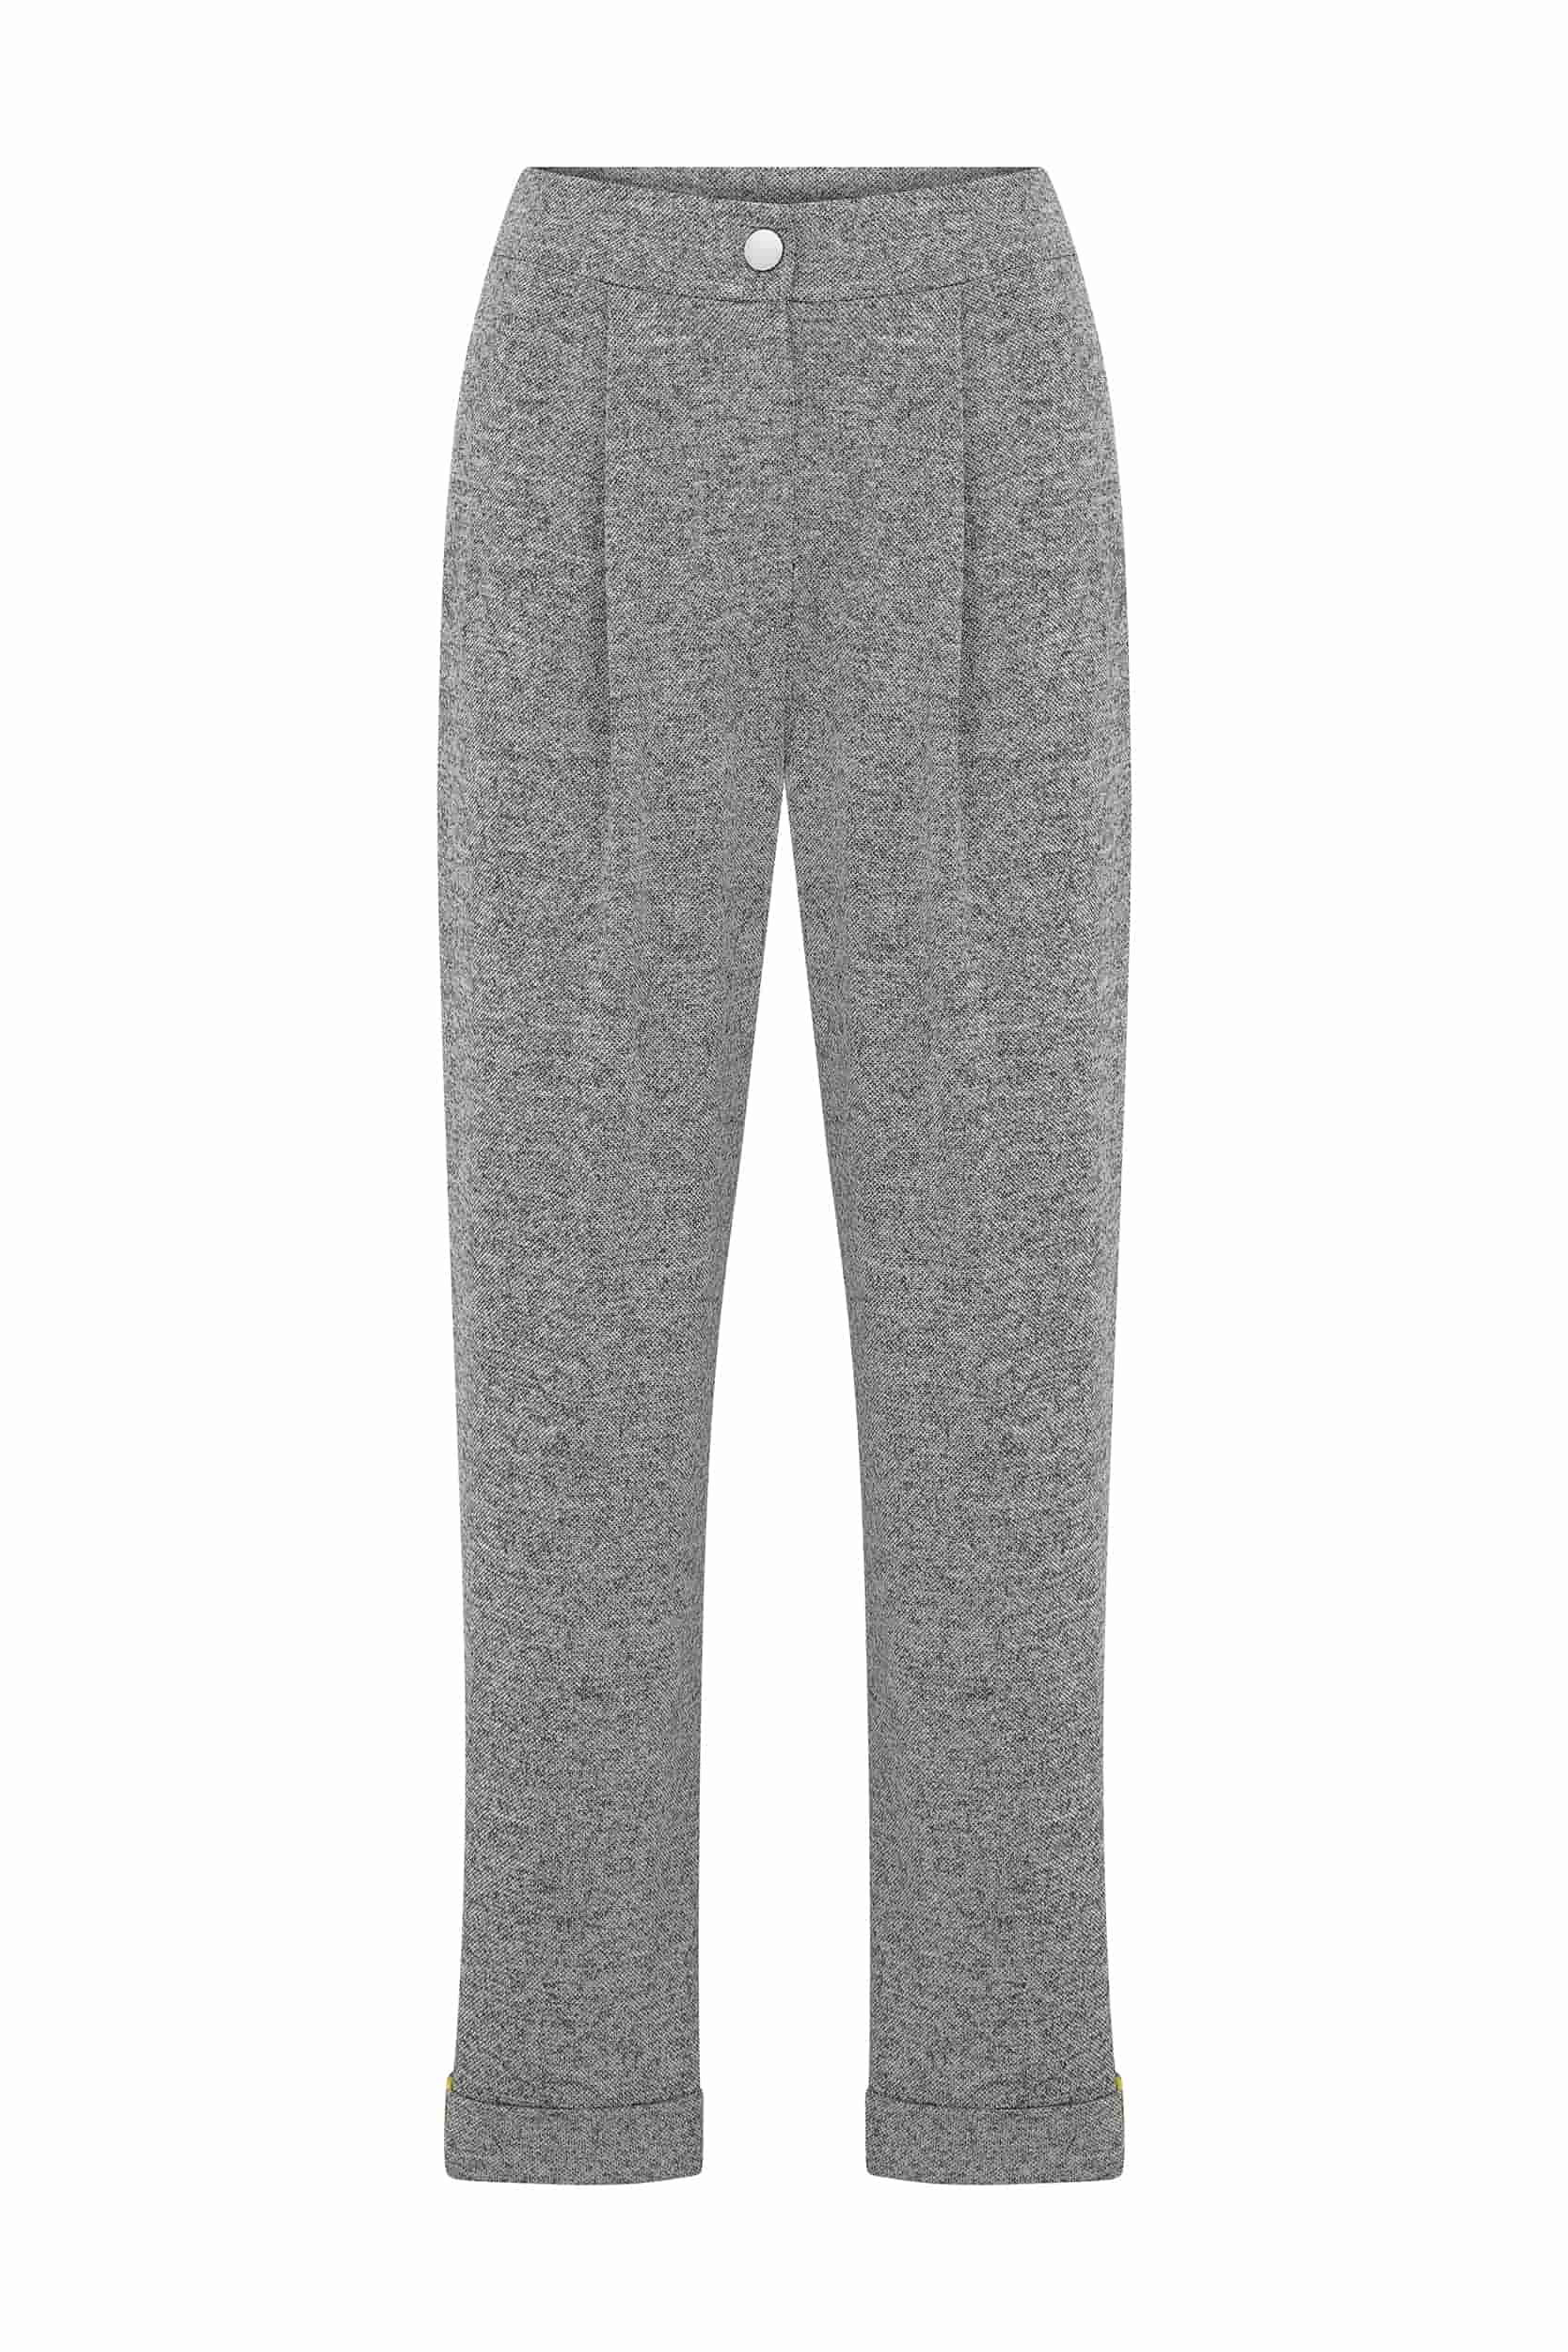 Pleated Gray Women's Trousers --[ORIGINAL]